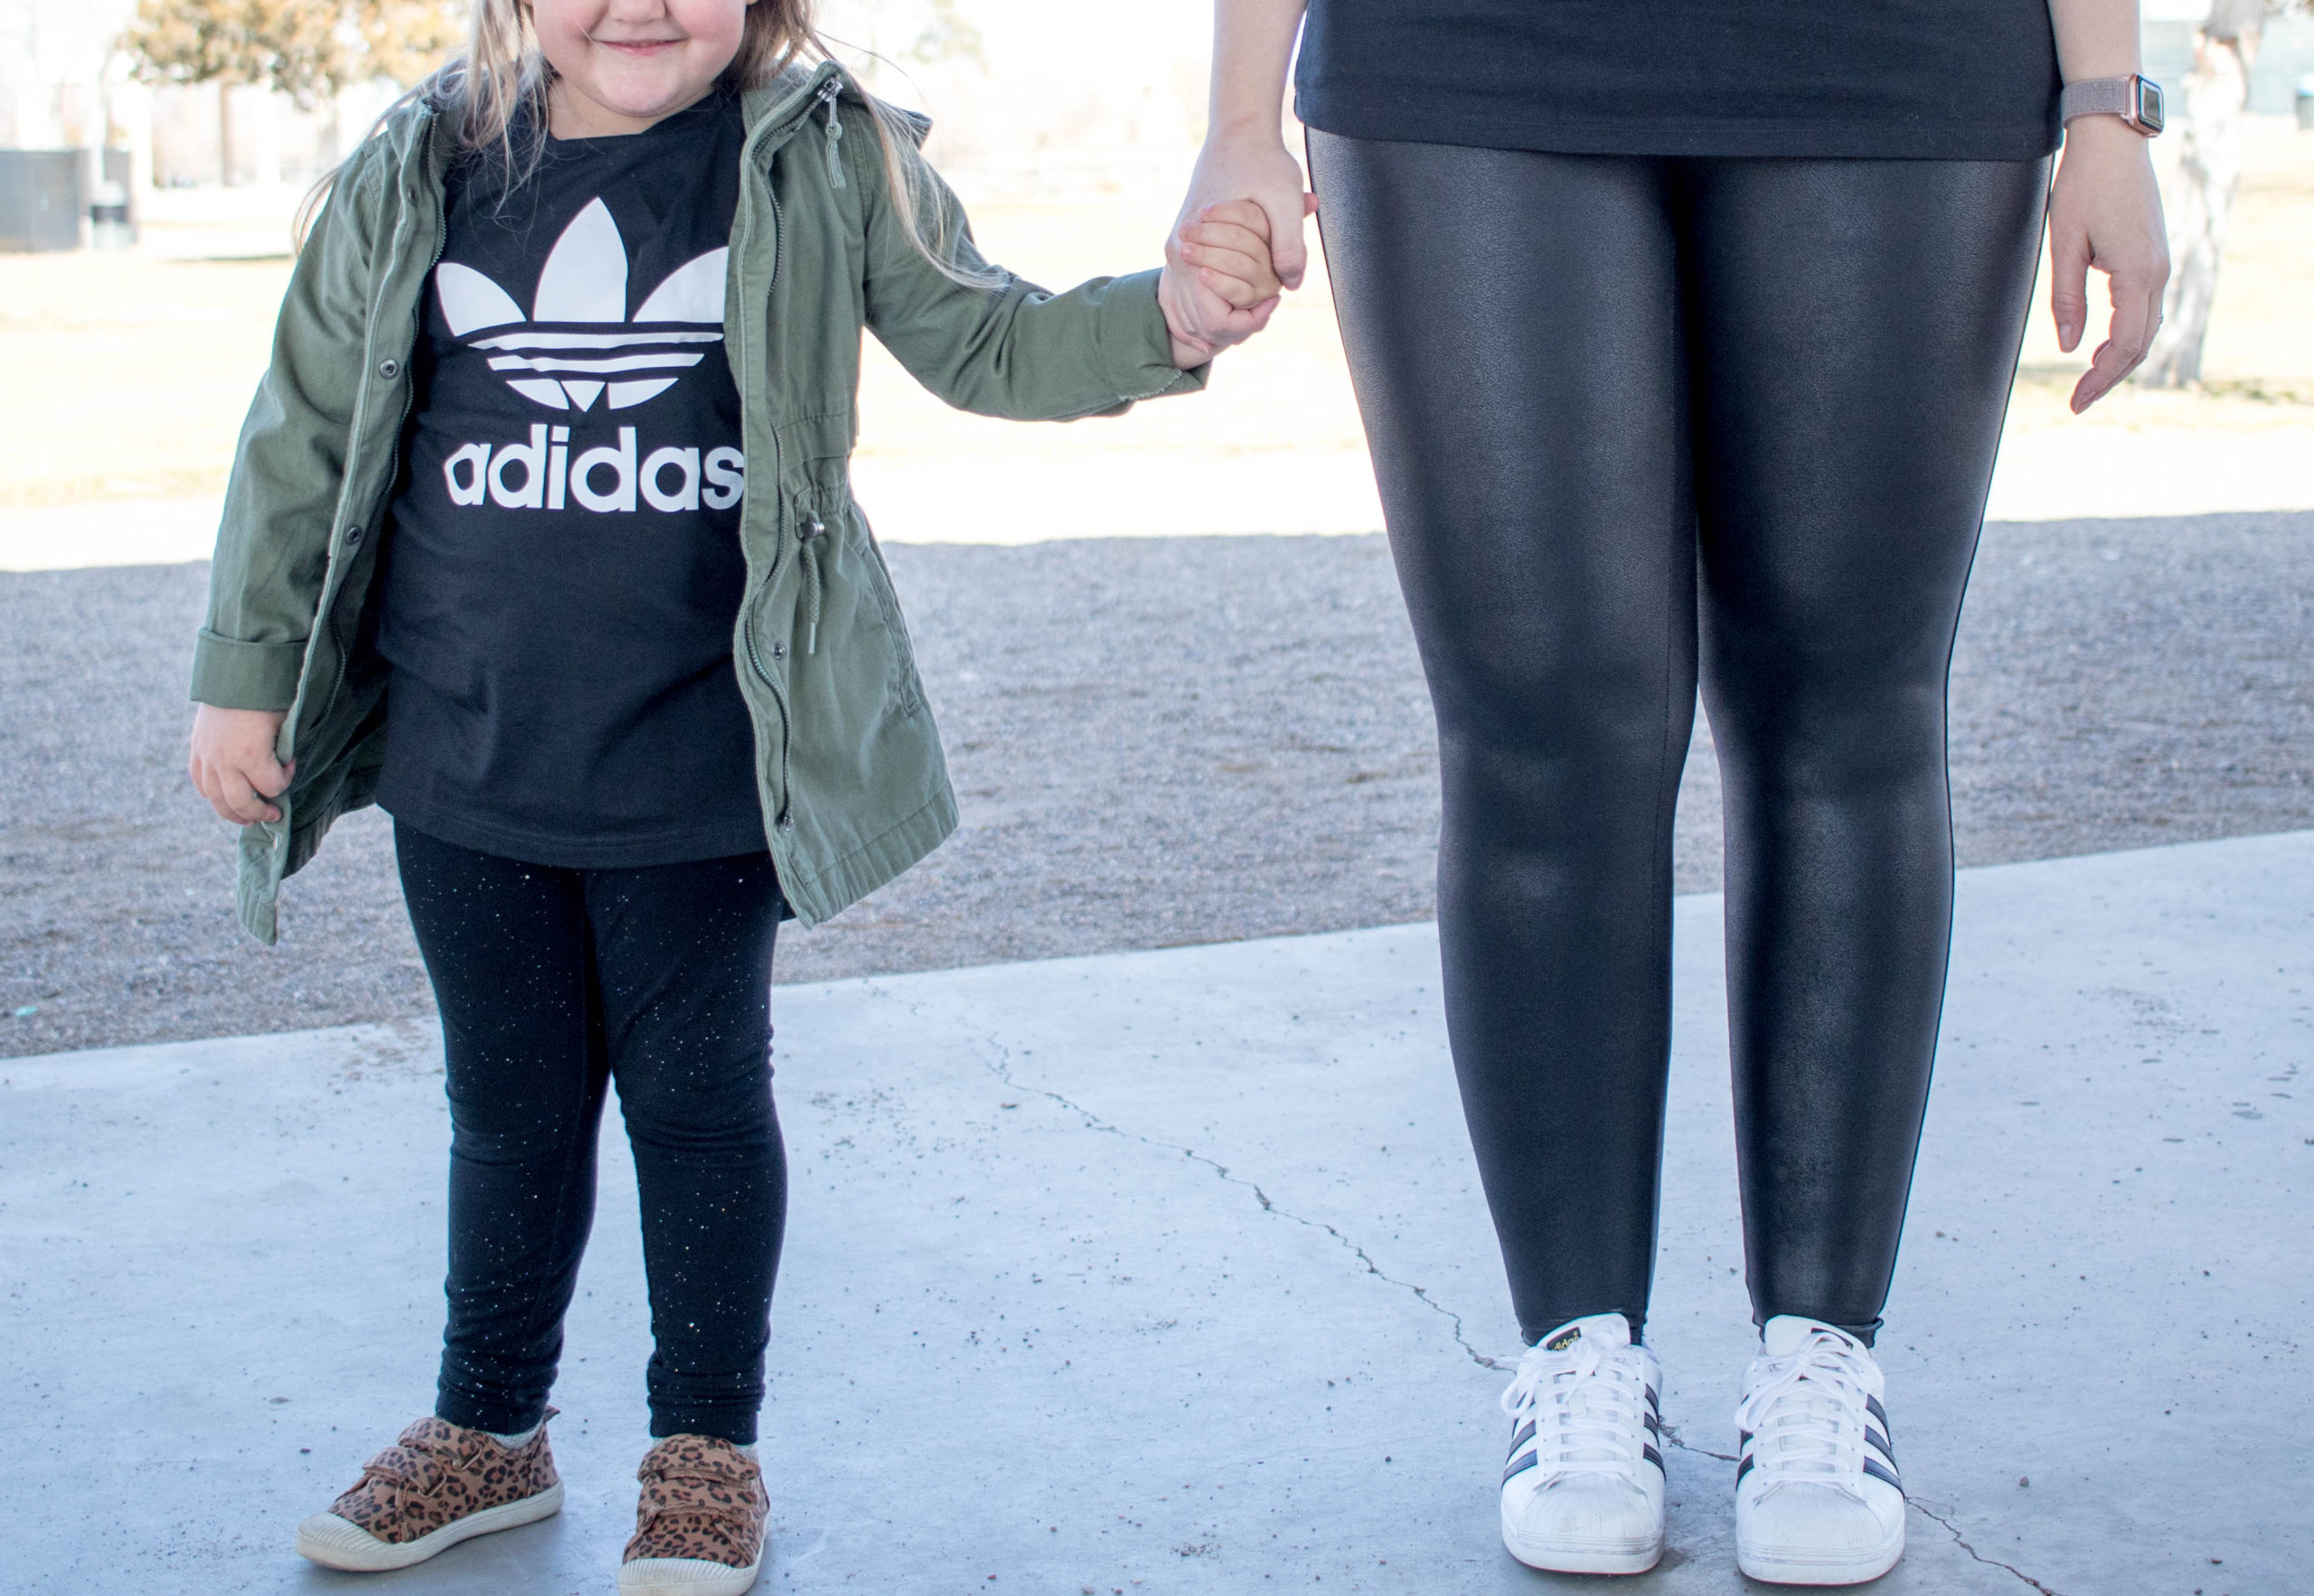 mommy and me Adidas outfits #twinning #motherhood #Adidas